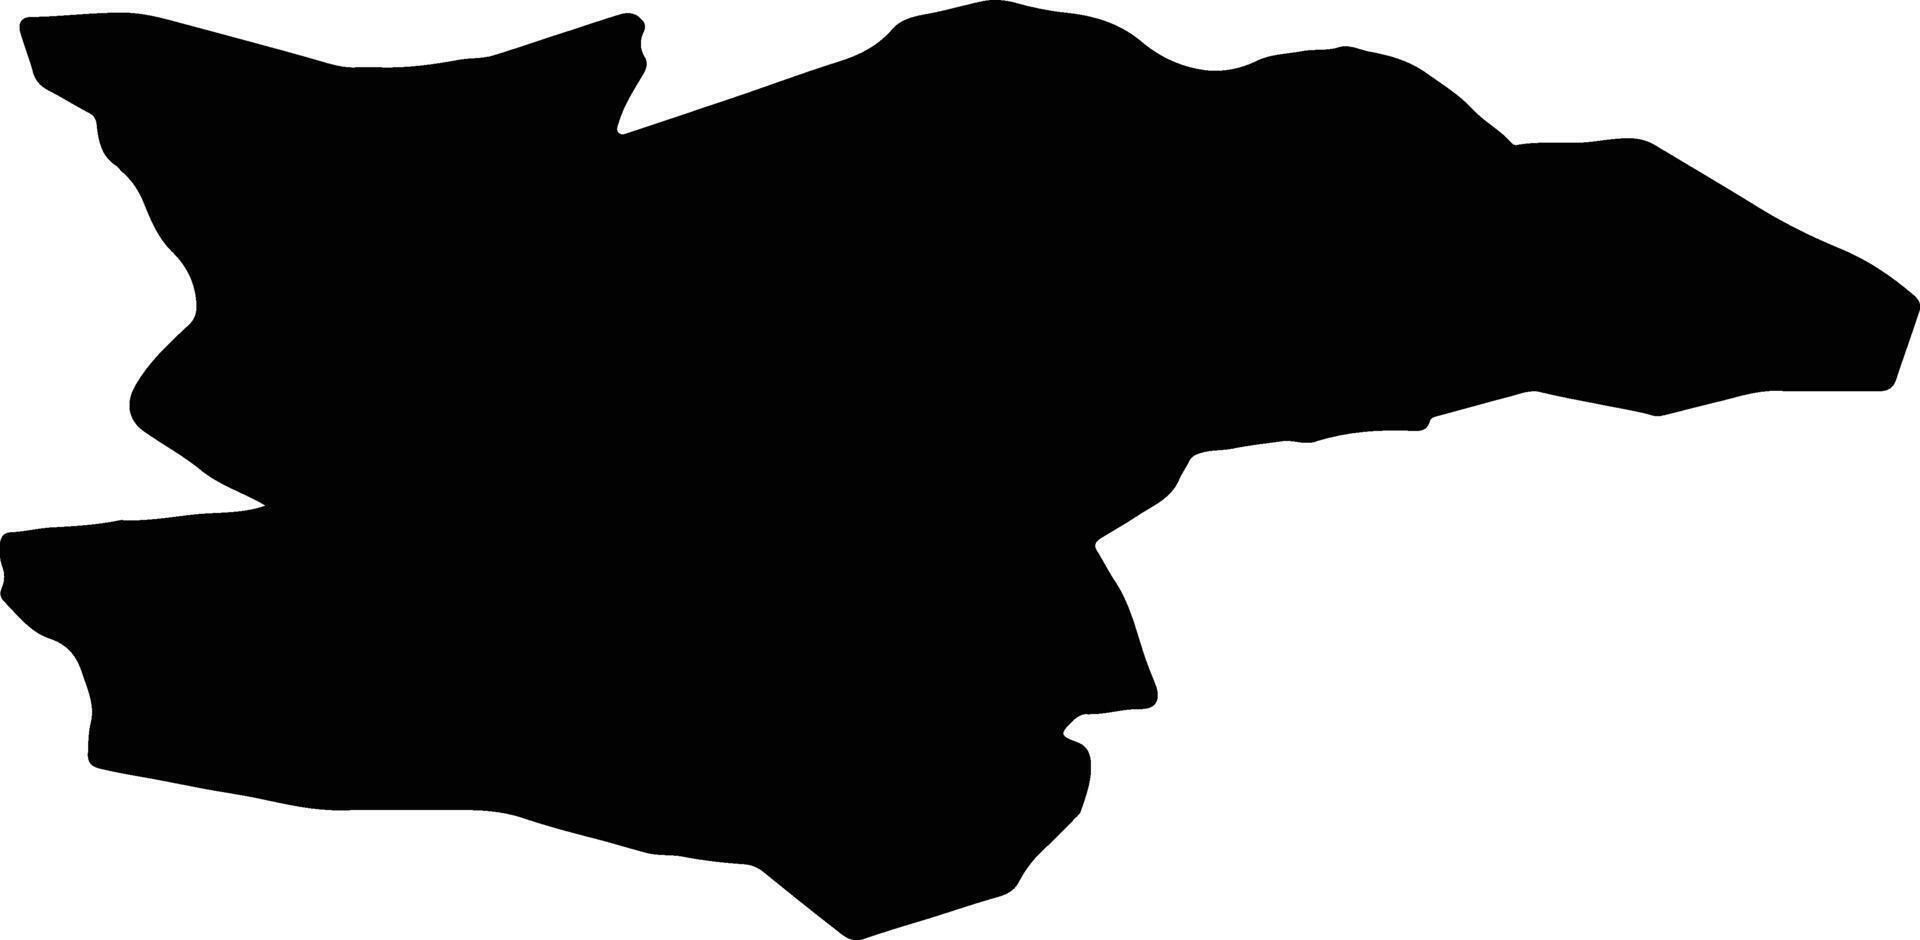 Erglu Latvia silhouette map vector